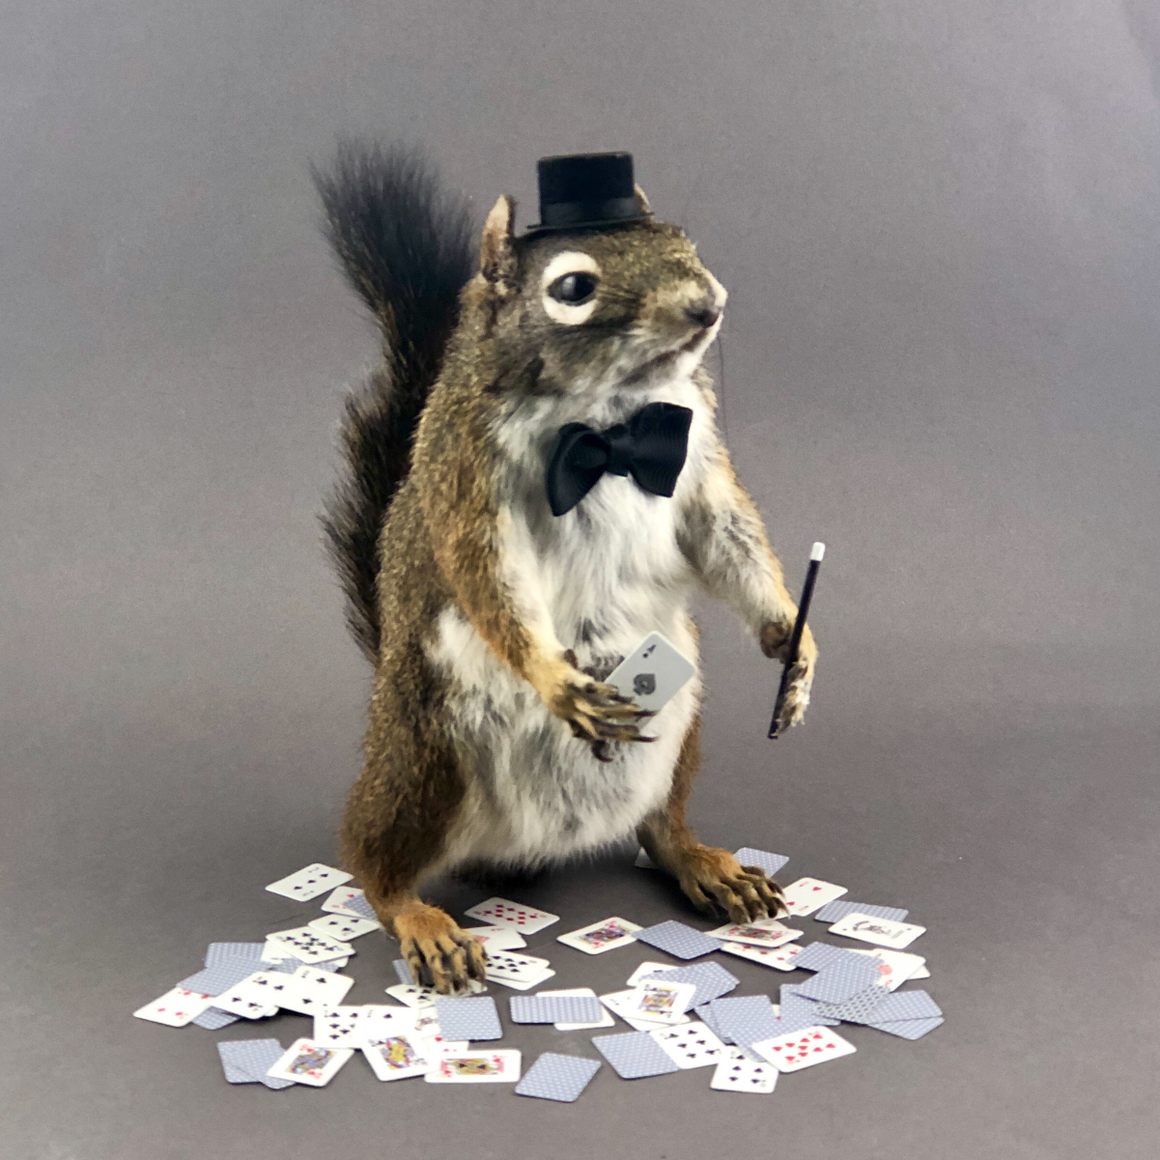 Magician squirrel taxidermy.